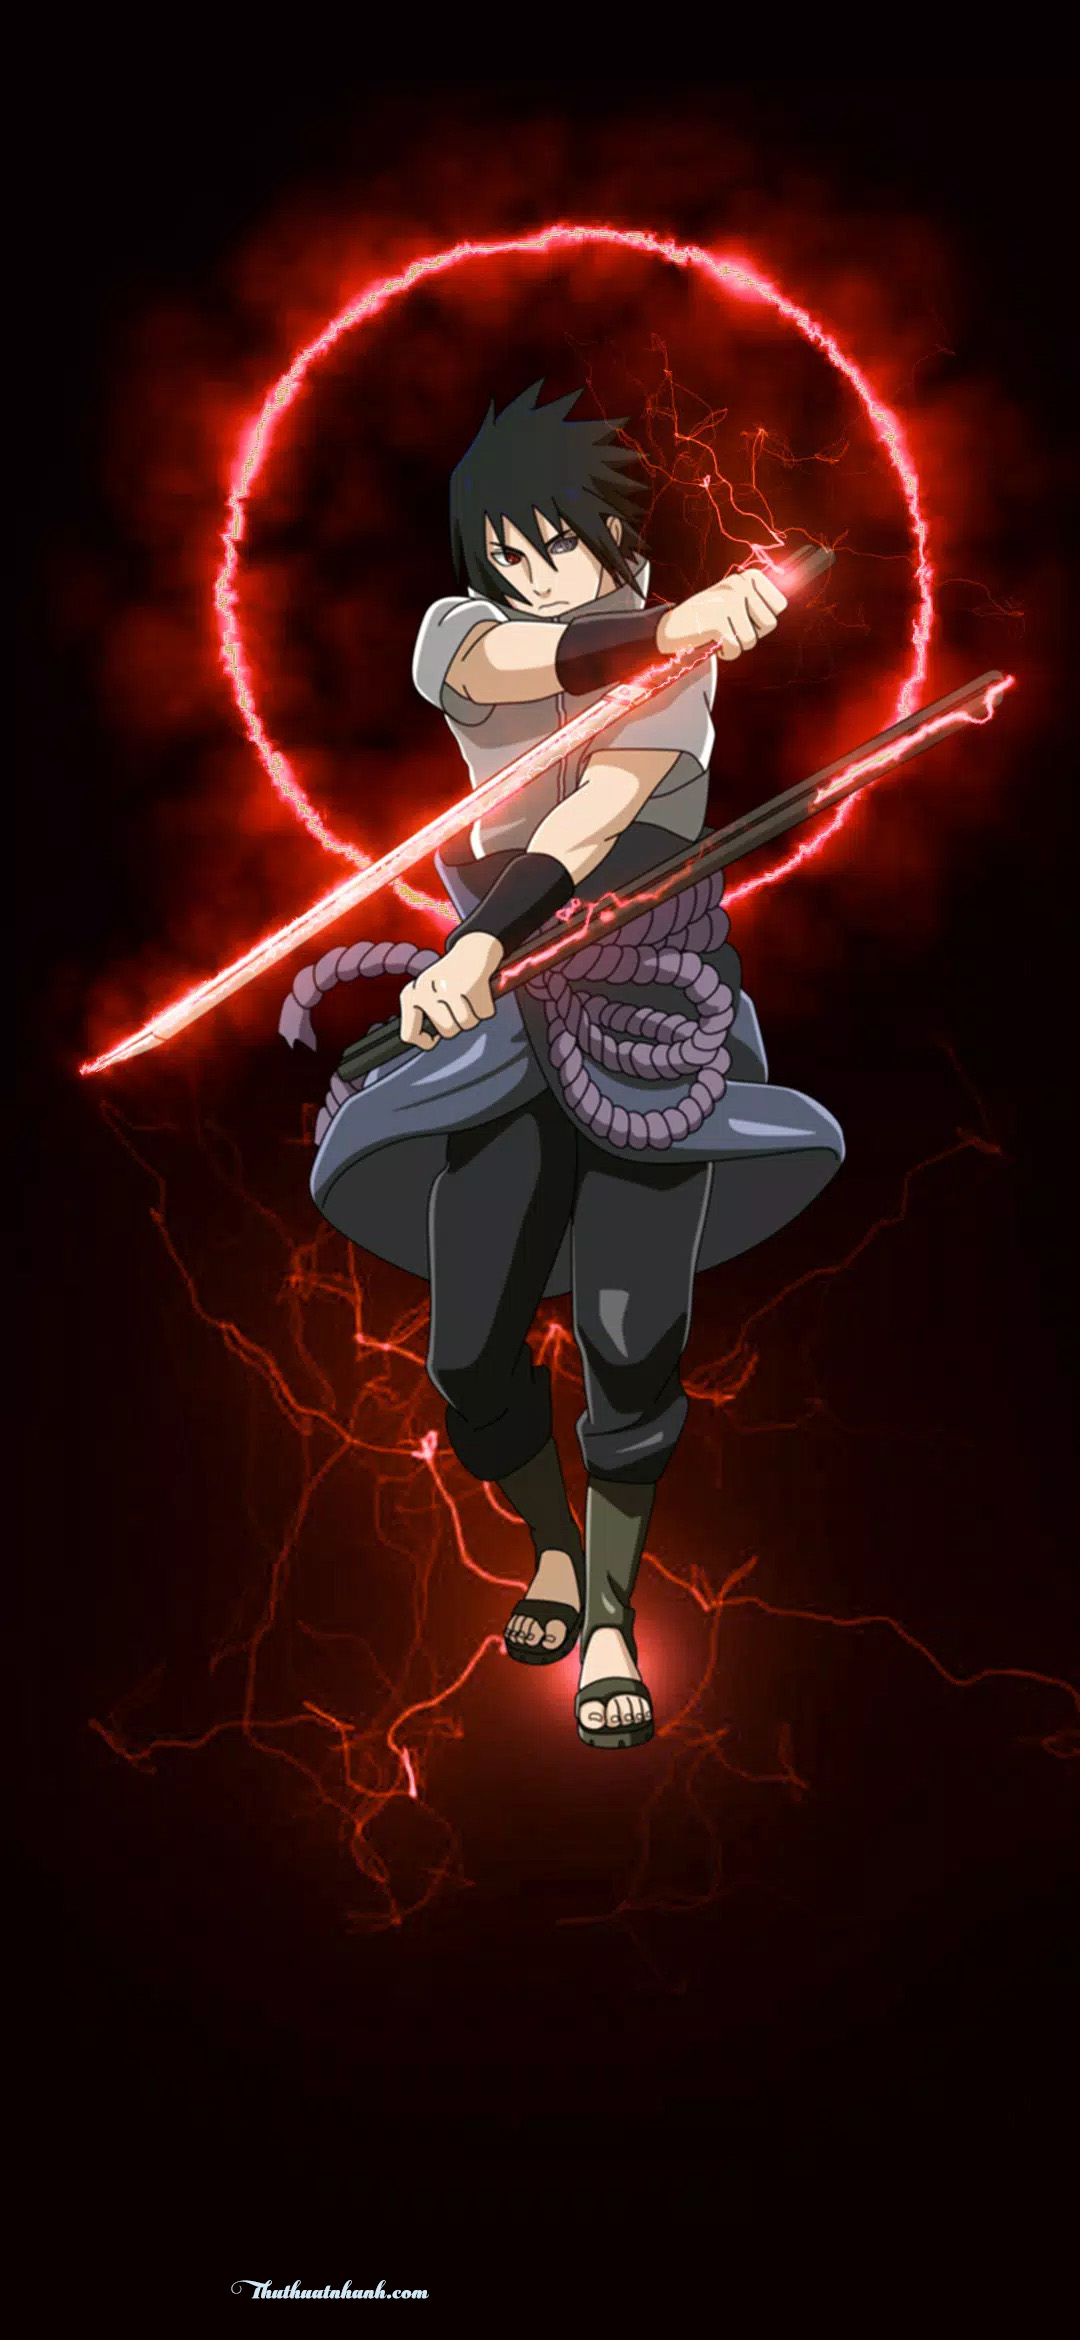 70 Ảnh Sasuke Cute Ngầu Chất Nhất Cho Fan Naruto